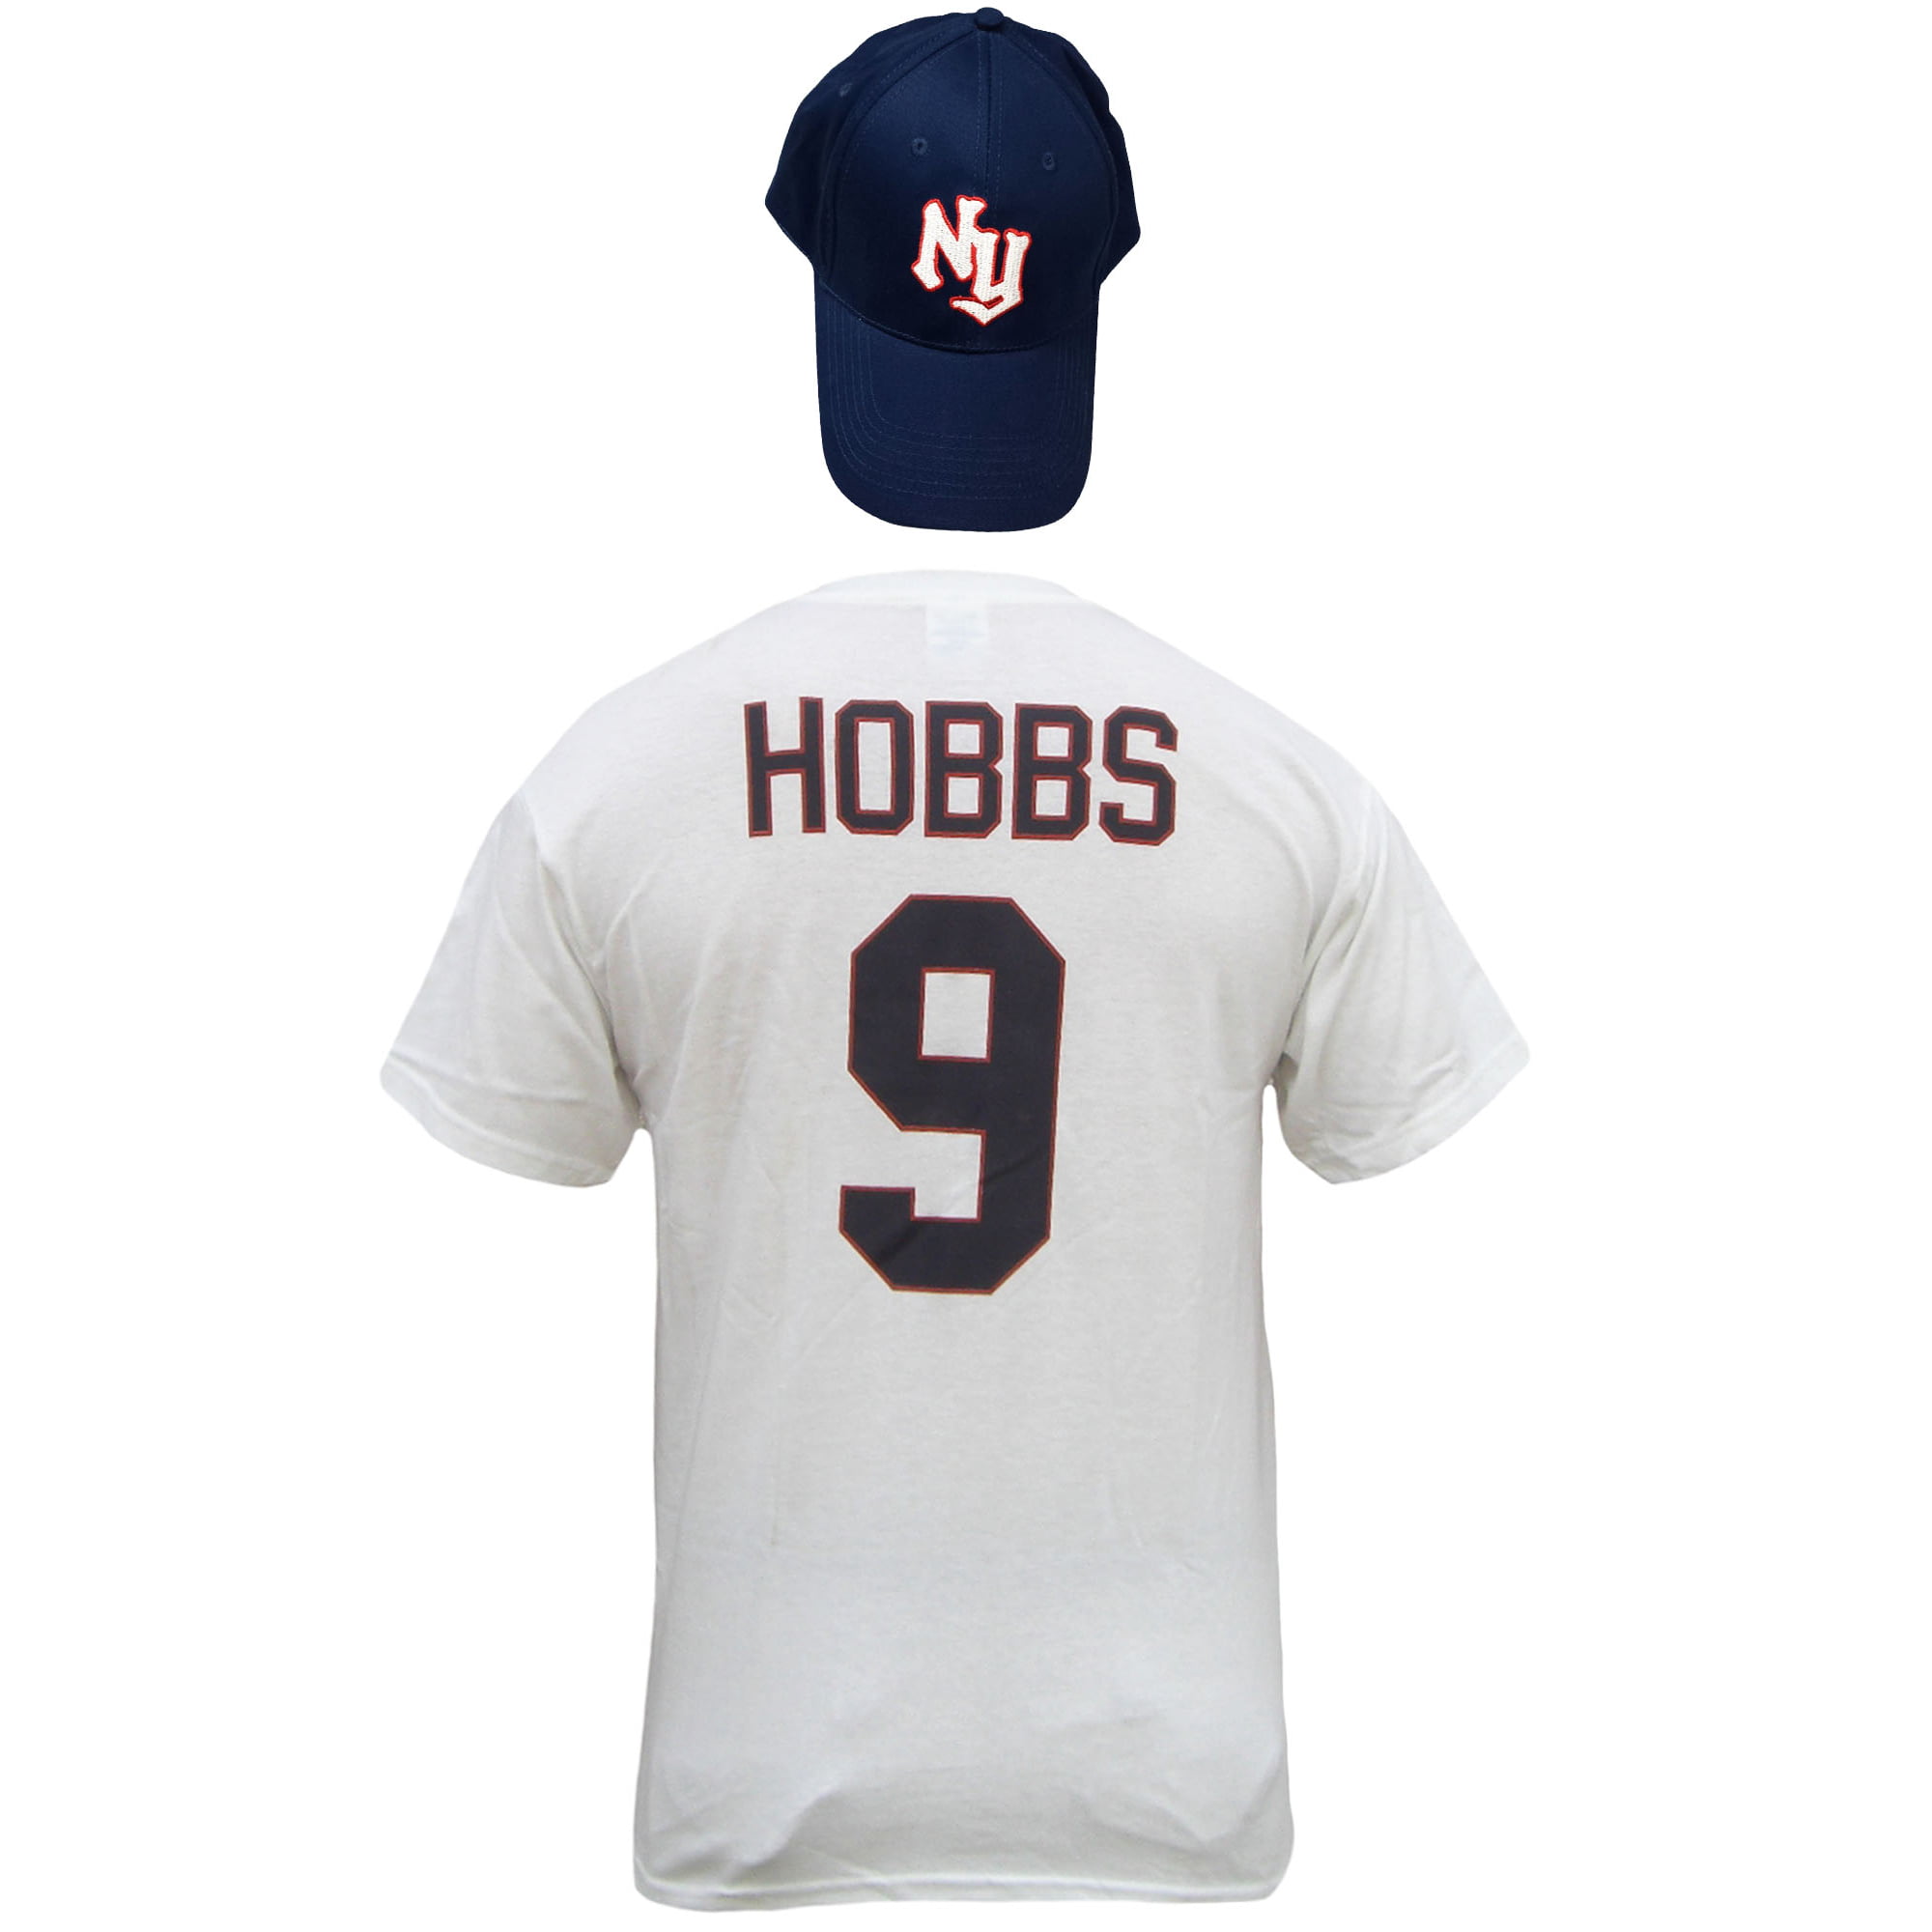 Roy Hobbs New York Knights Adult Costume Jersey Shirt Baseball Cap Hat Natural, Men's, Size: 3XL